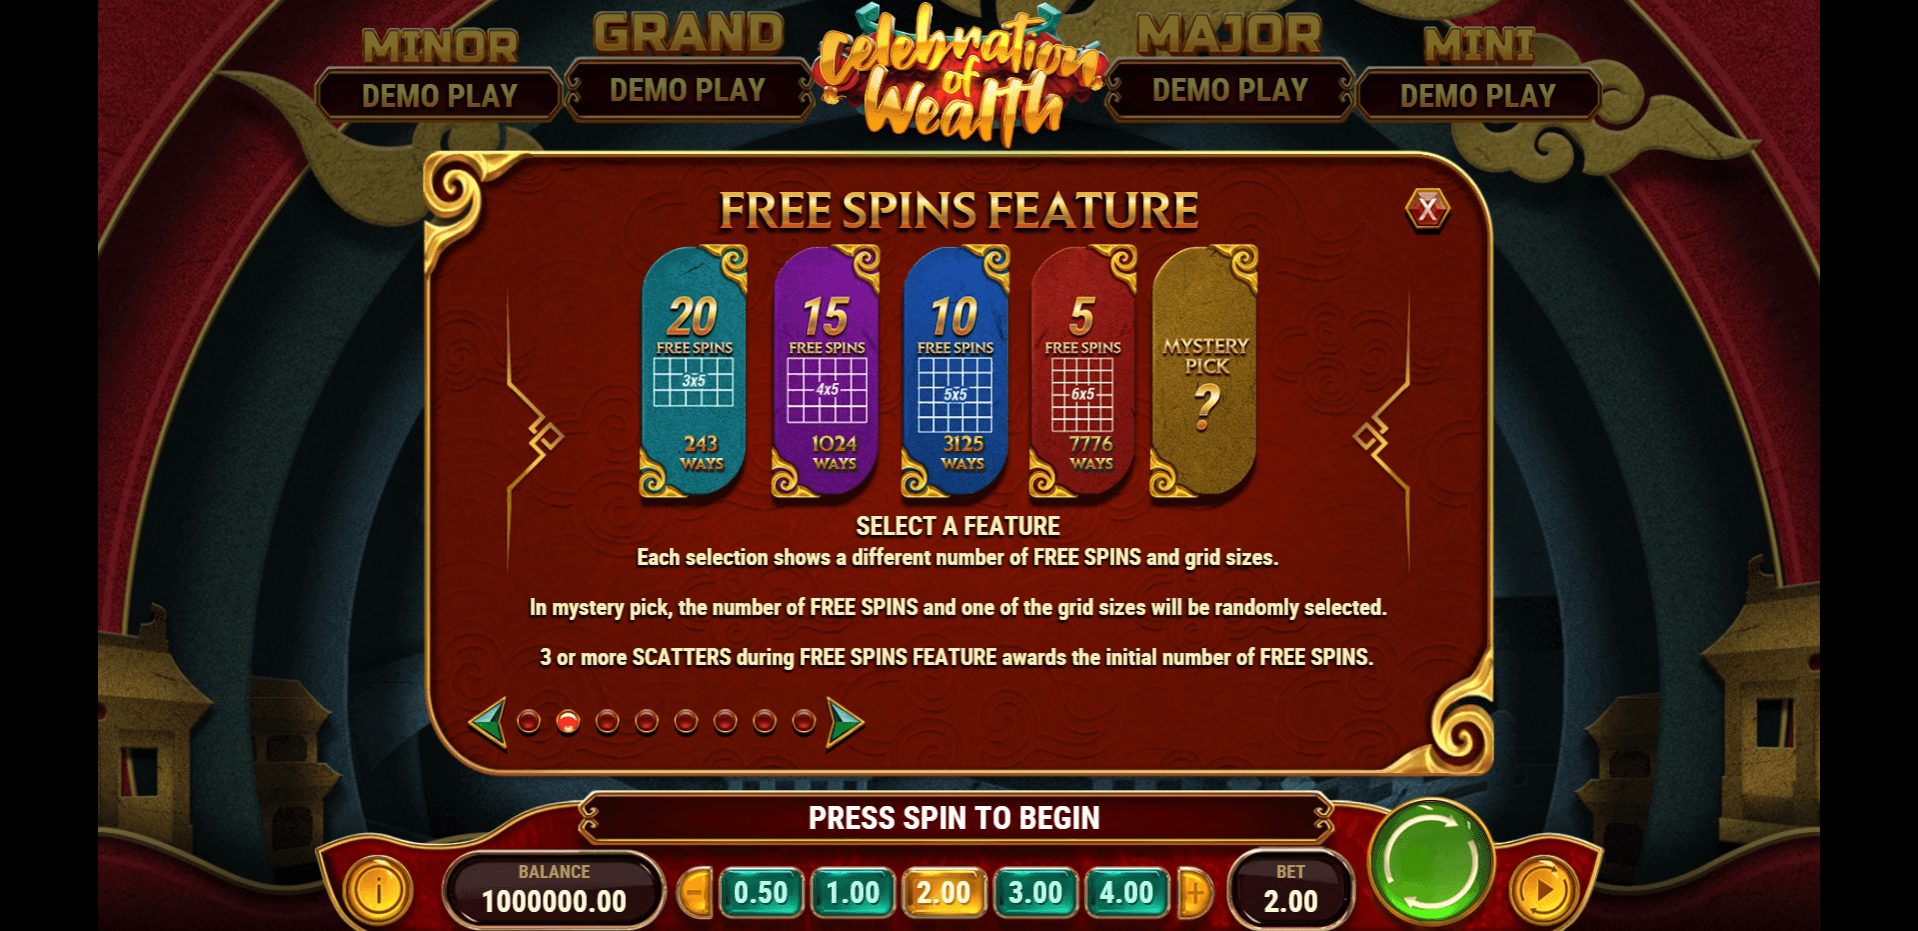 celebration of wealth slot machine detail image 1